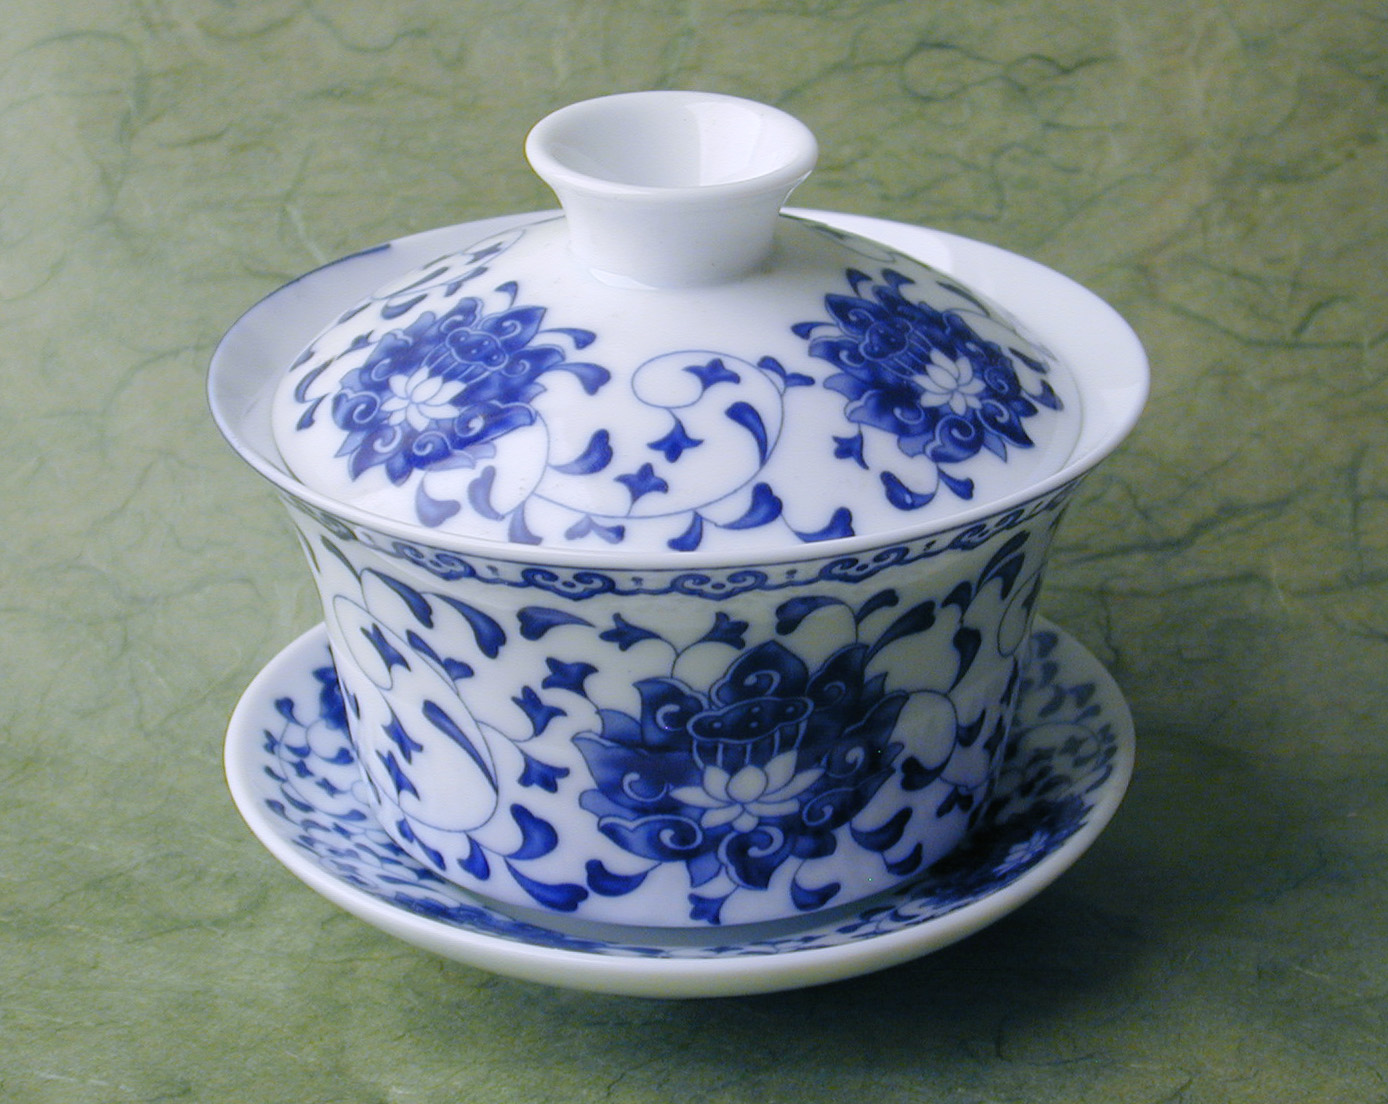 Details about   Porcelain Gaiwan Tea Cup Sculpture flower lotus 3D China Ceramics Gift High Qual 